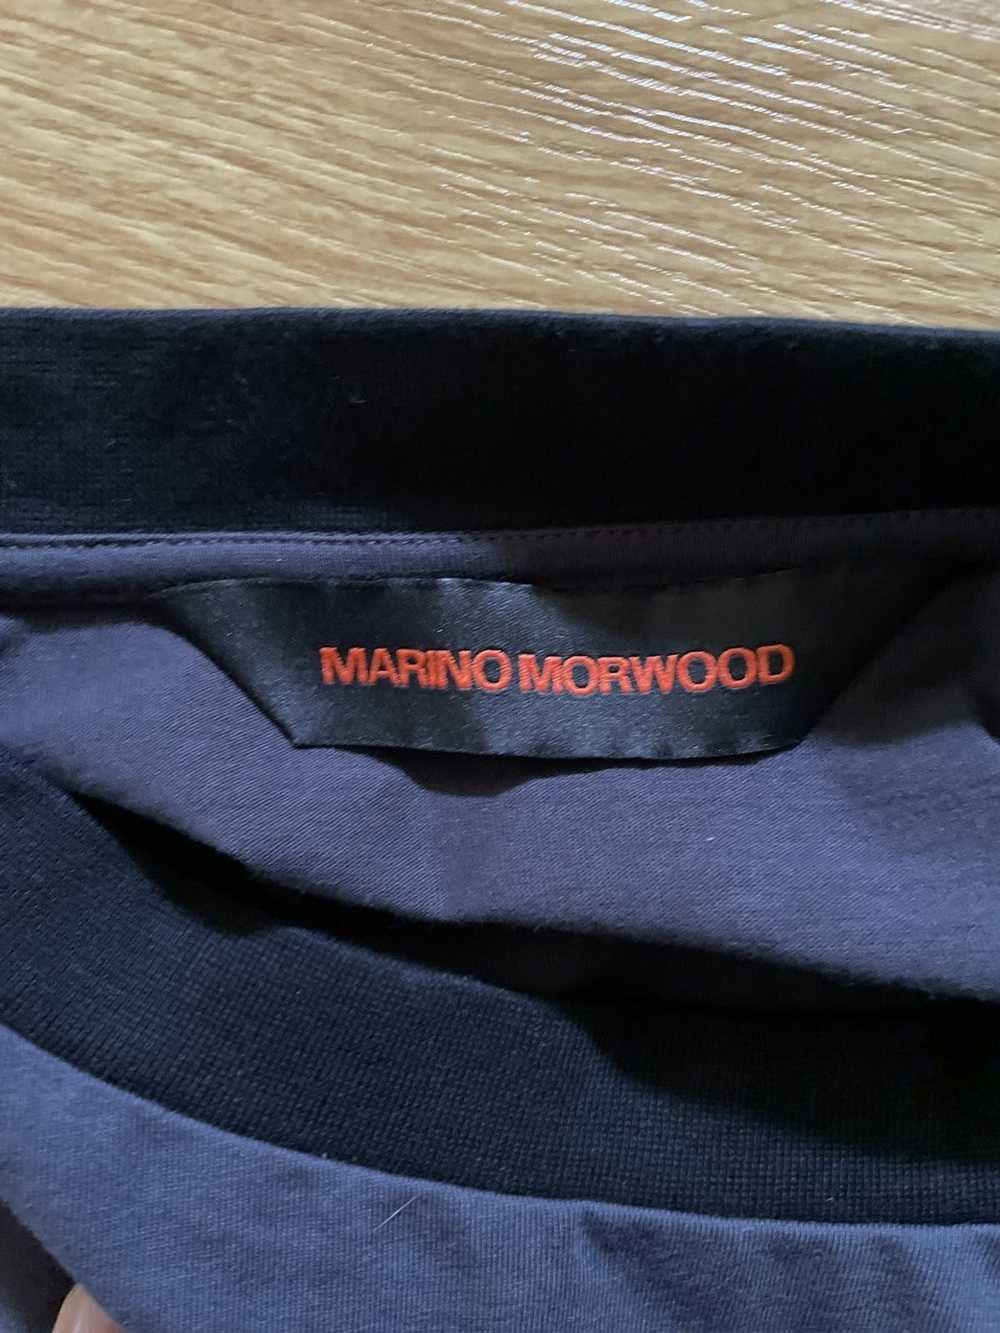 Marino Morwood Kid Cudi Marino Morwood Long Sleeve - image 3